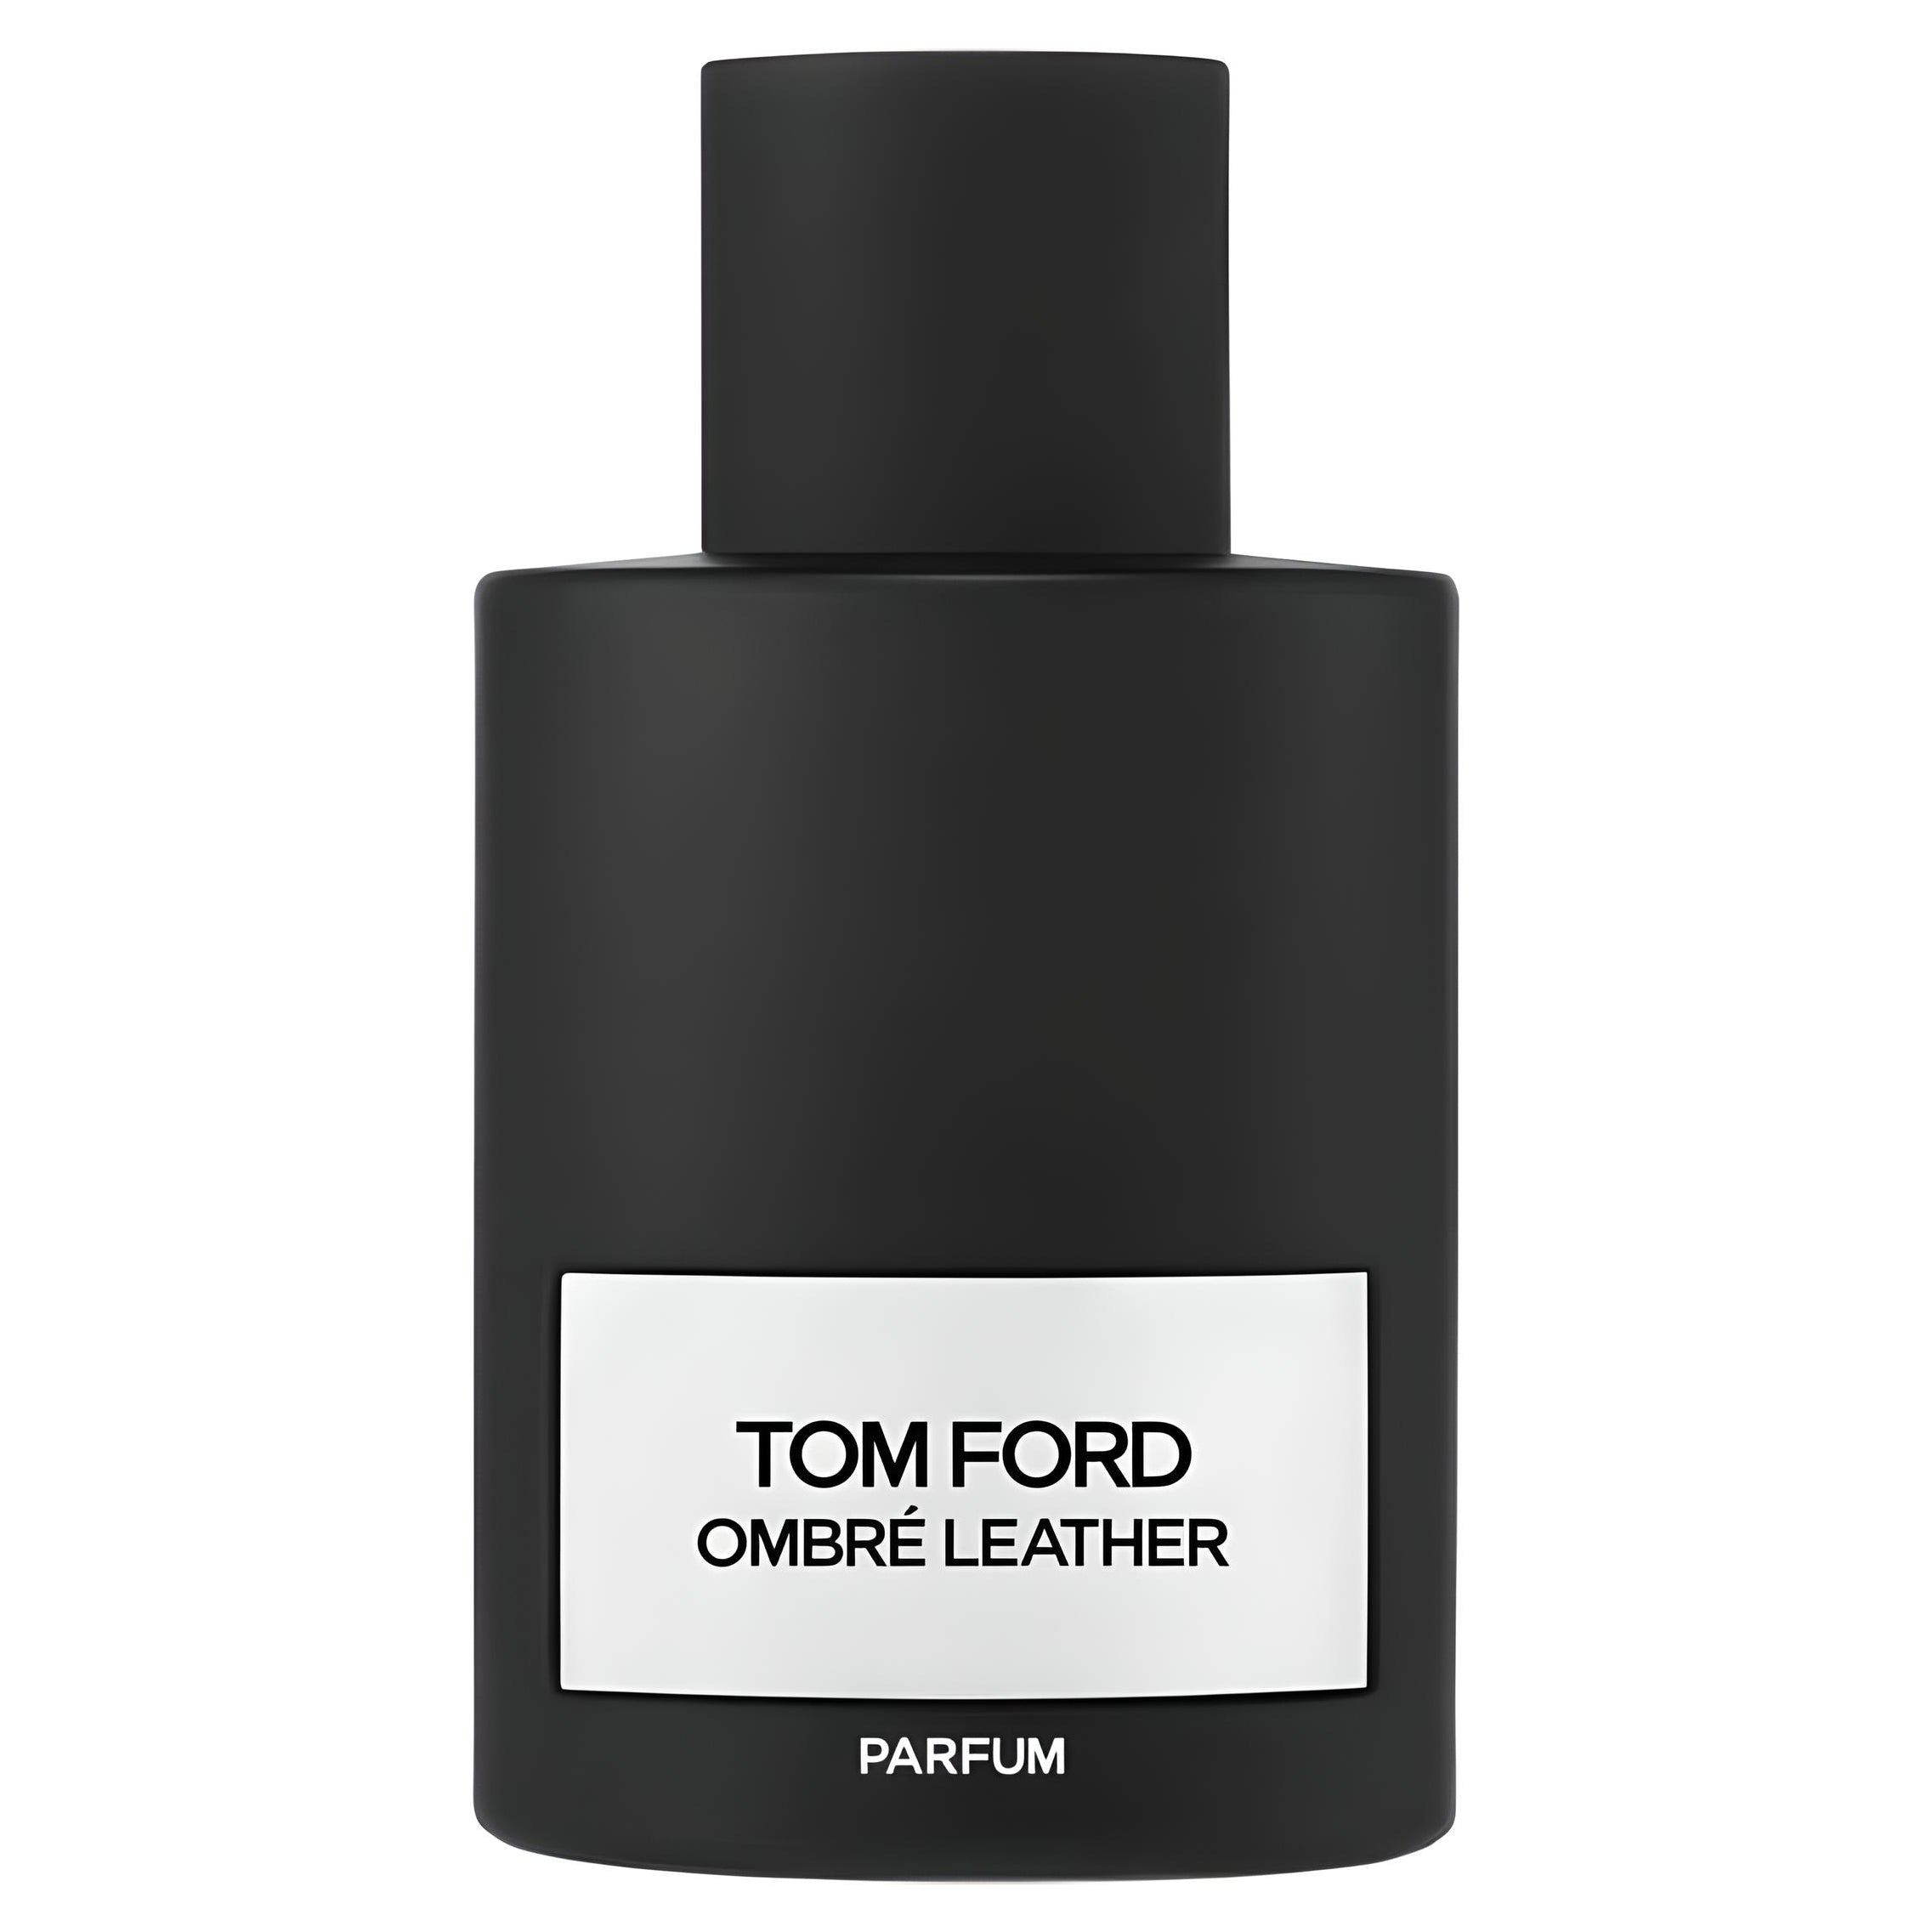 Tom Ford Ombre Leather Parfum Eau de Parfum TOM FORD   